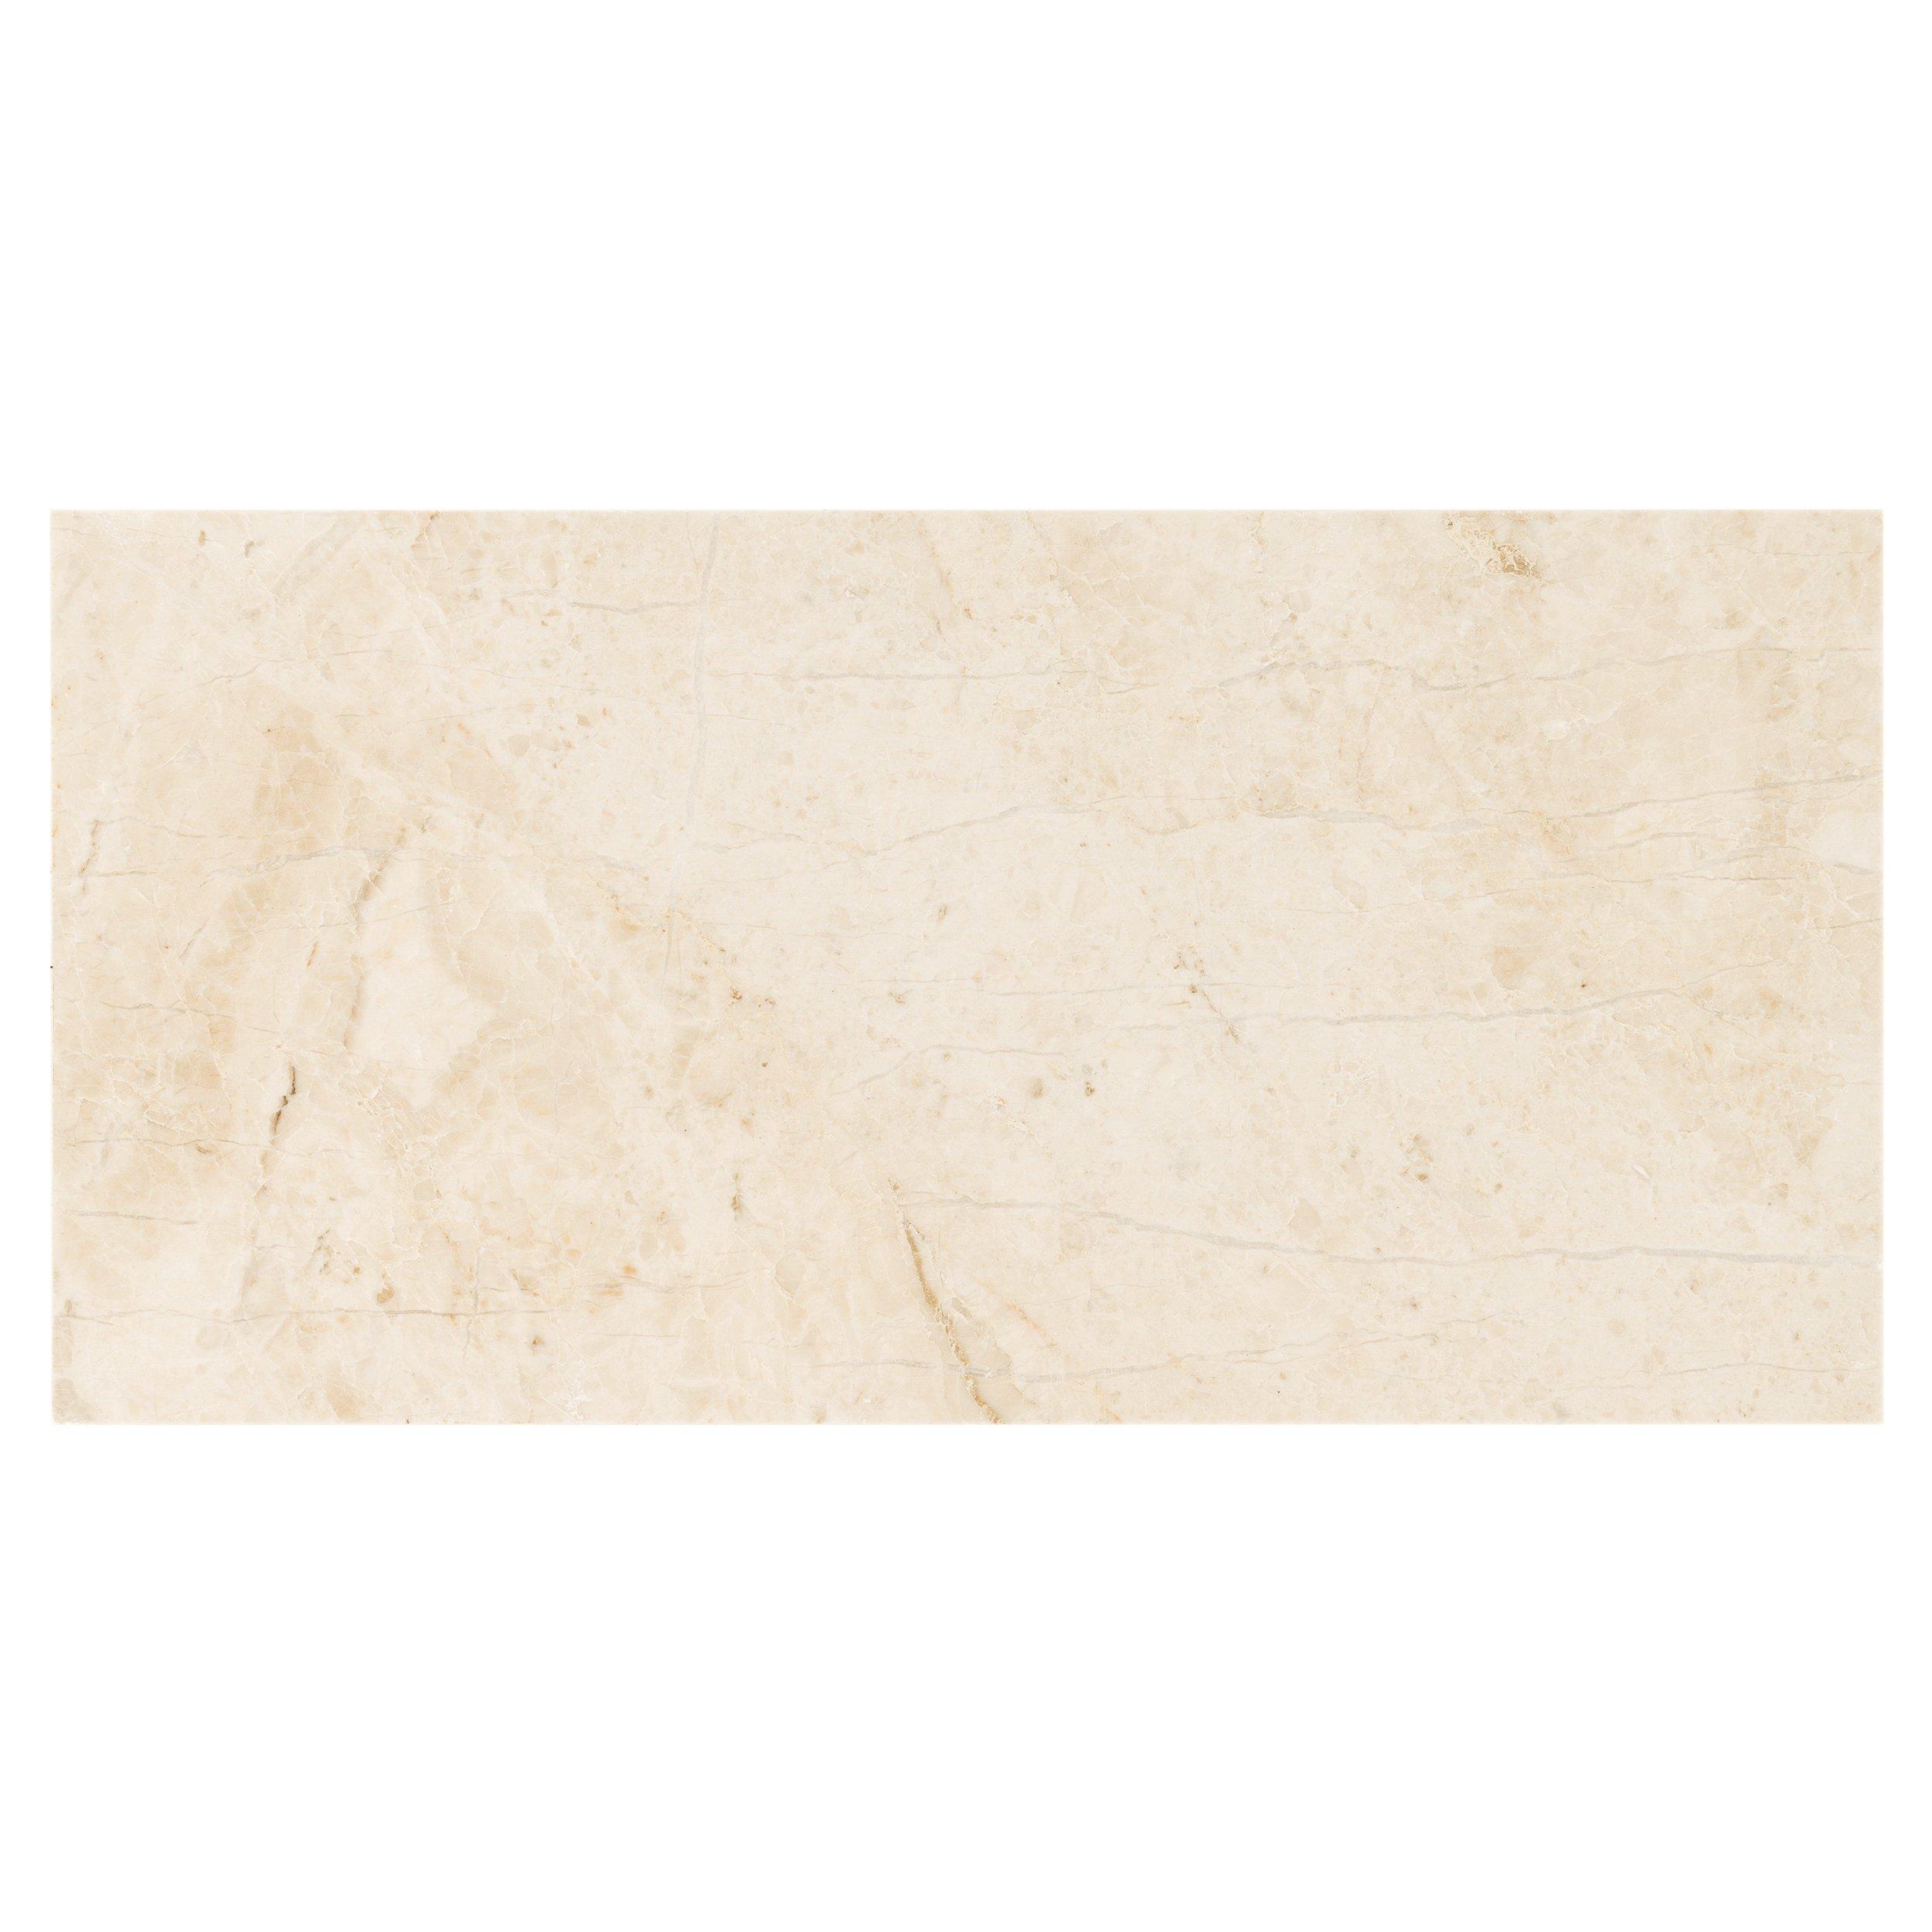 Tuscany Cream Polished Marble Tile - 12 x 24 - 100136639 | Floor and Decor